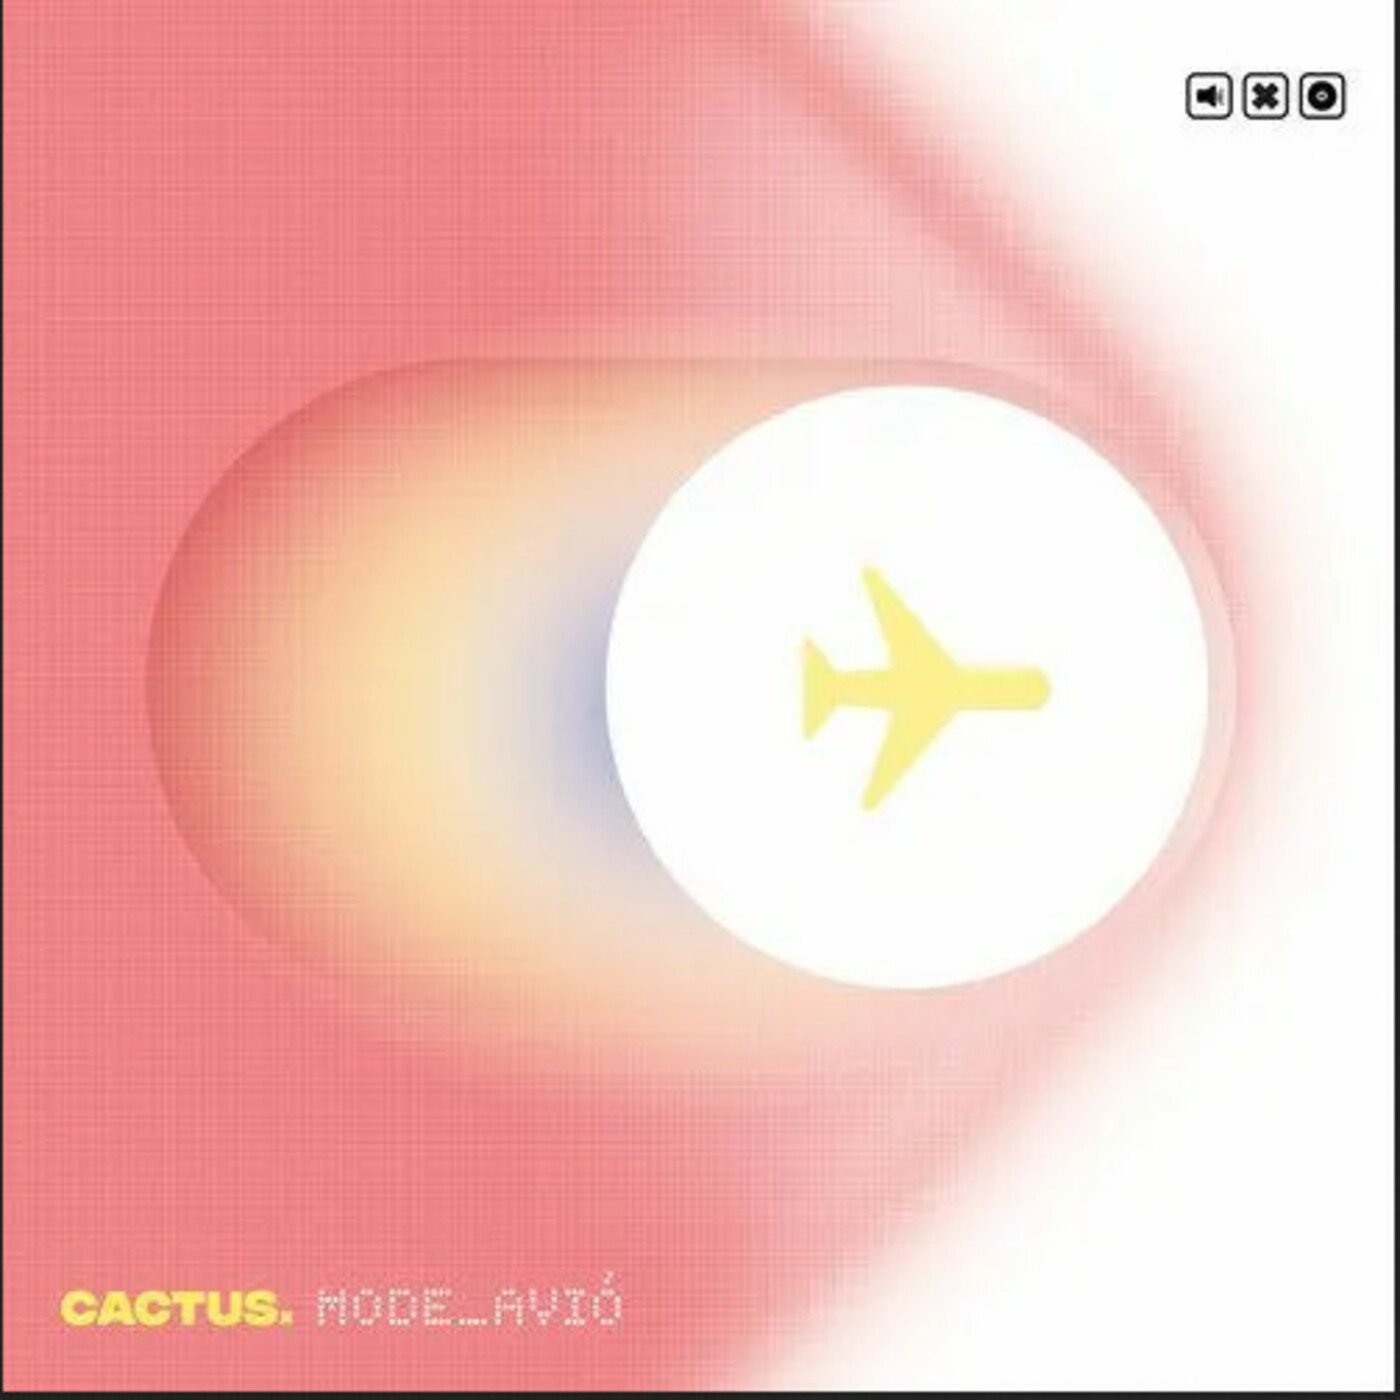 Cactus - Mode avió | musica en valencià